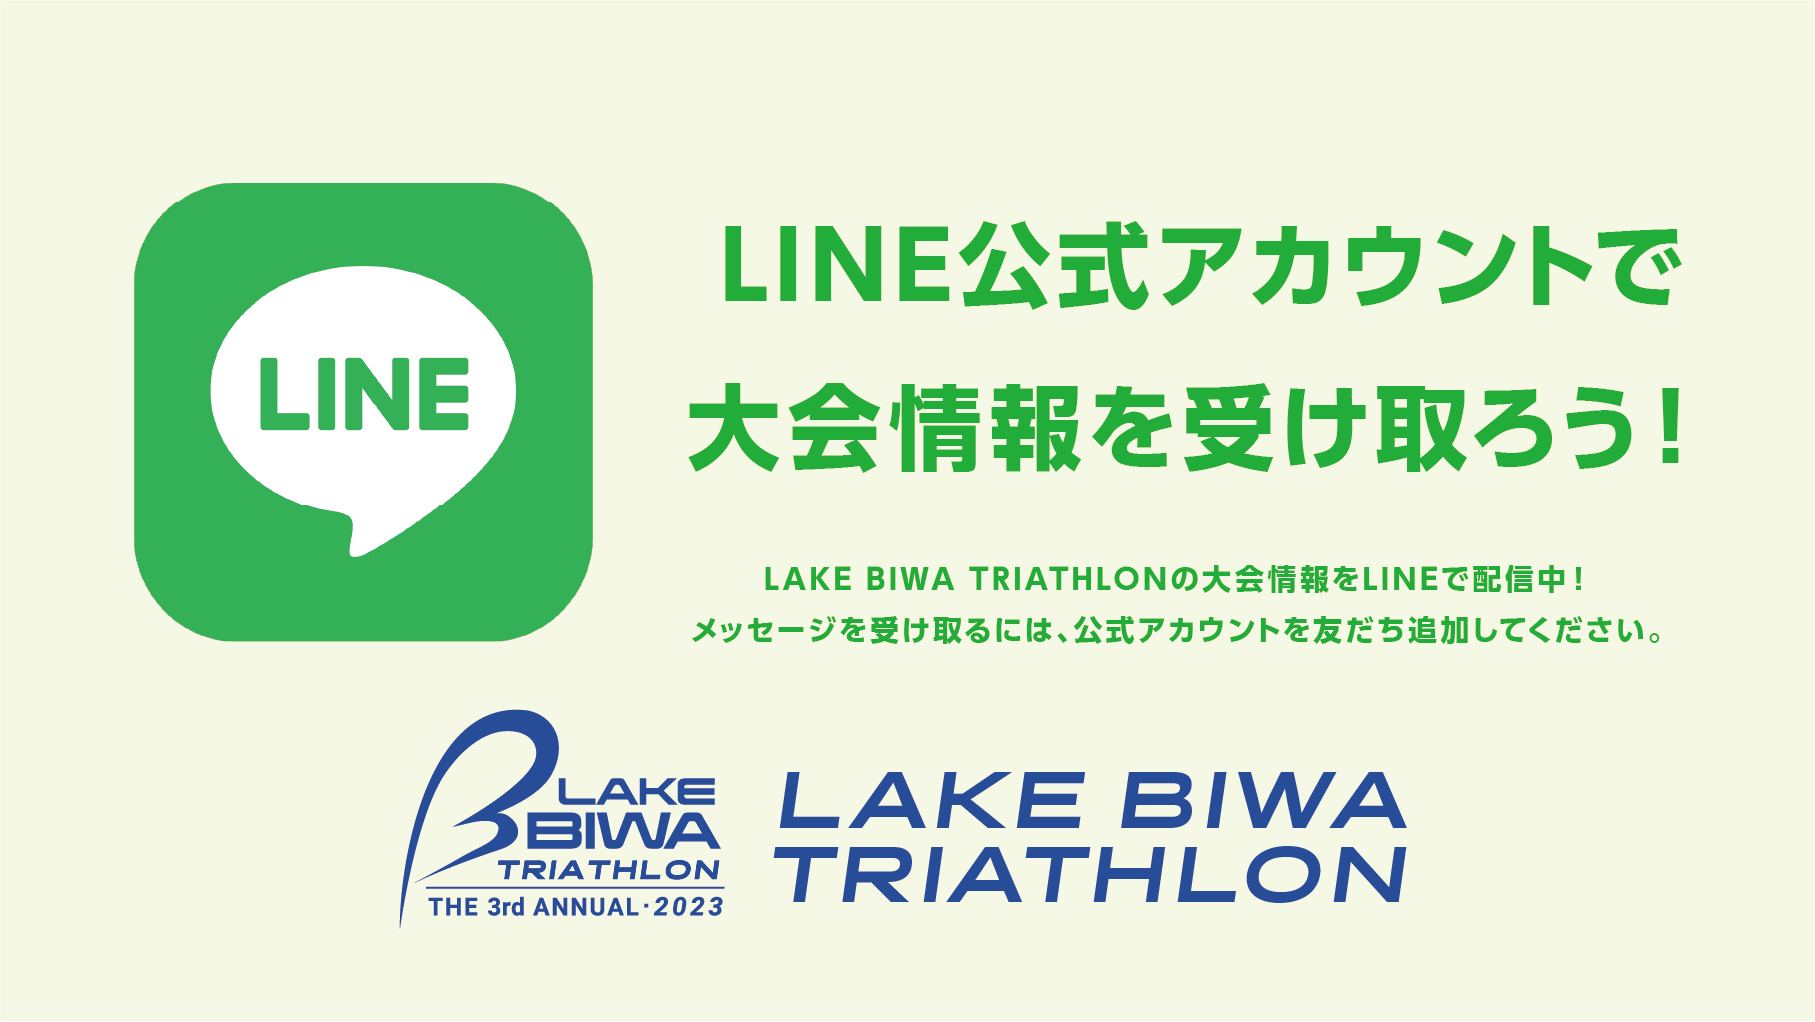 LAKE BIWA TRIATHLON 大会公式LINEアカウント開設のお知らせ